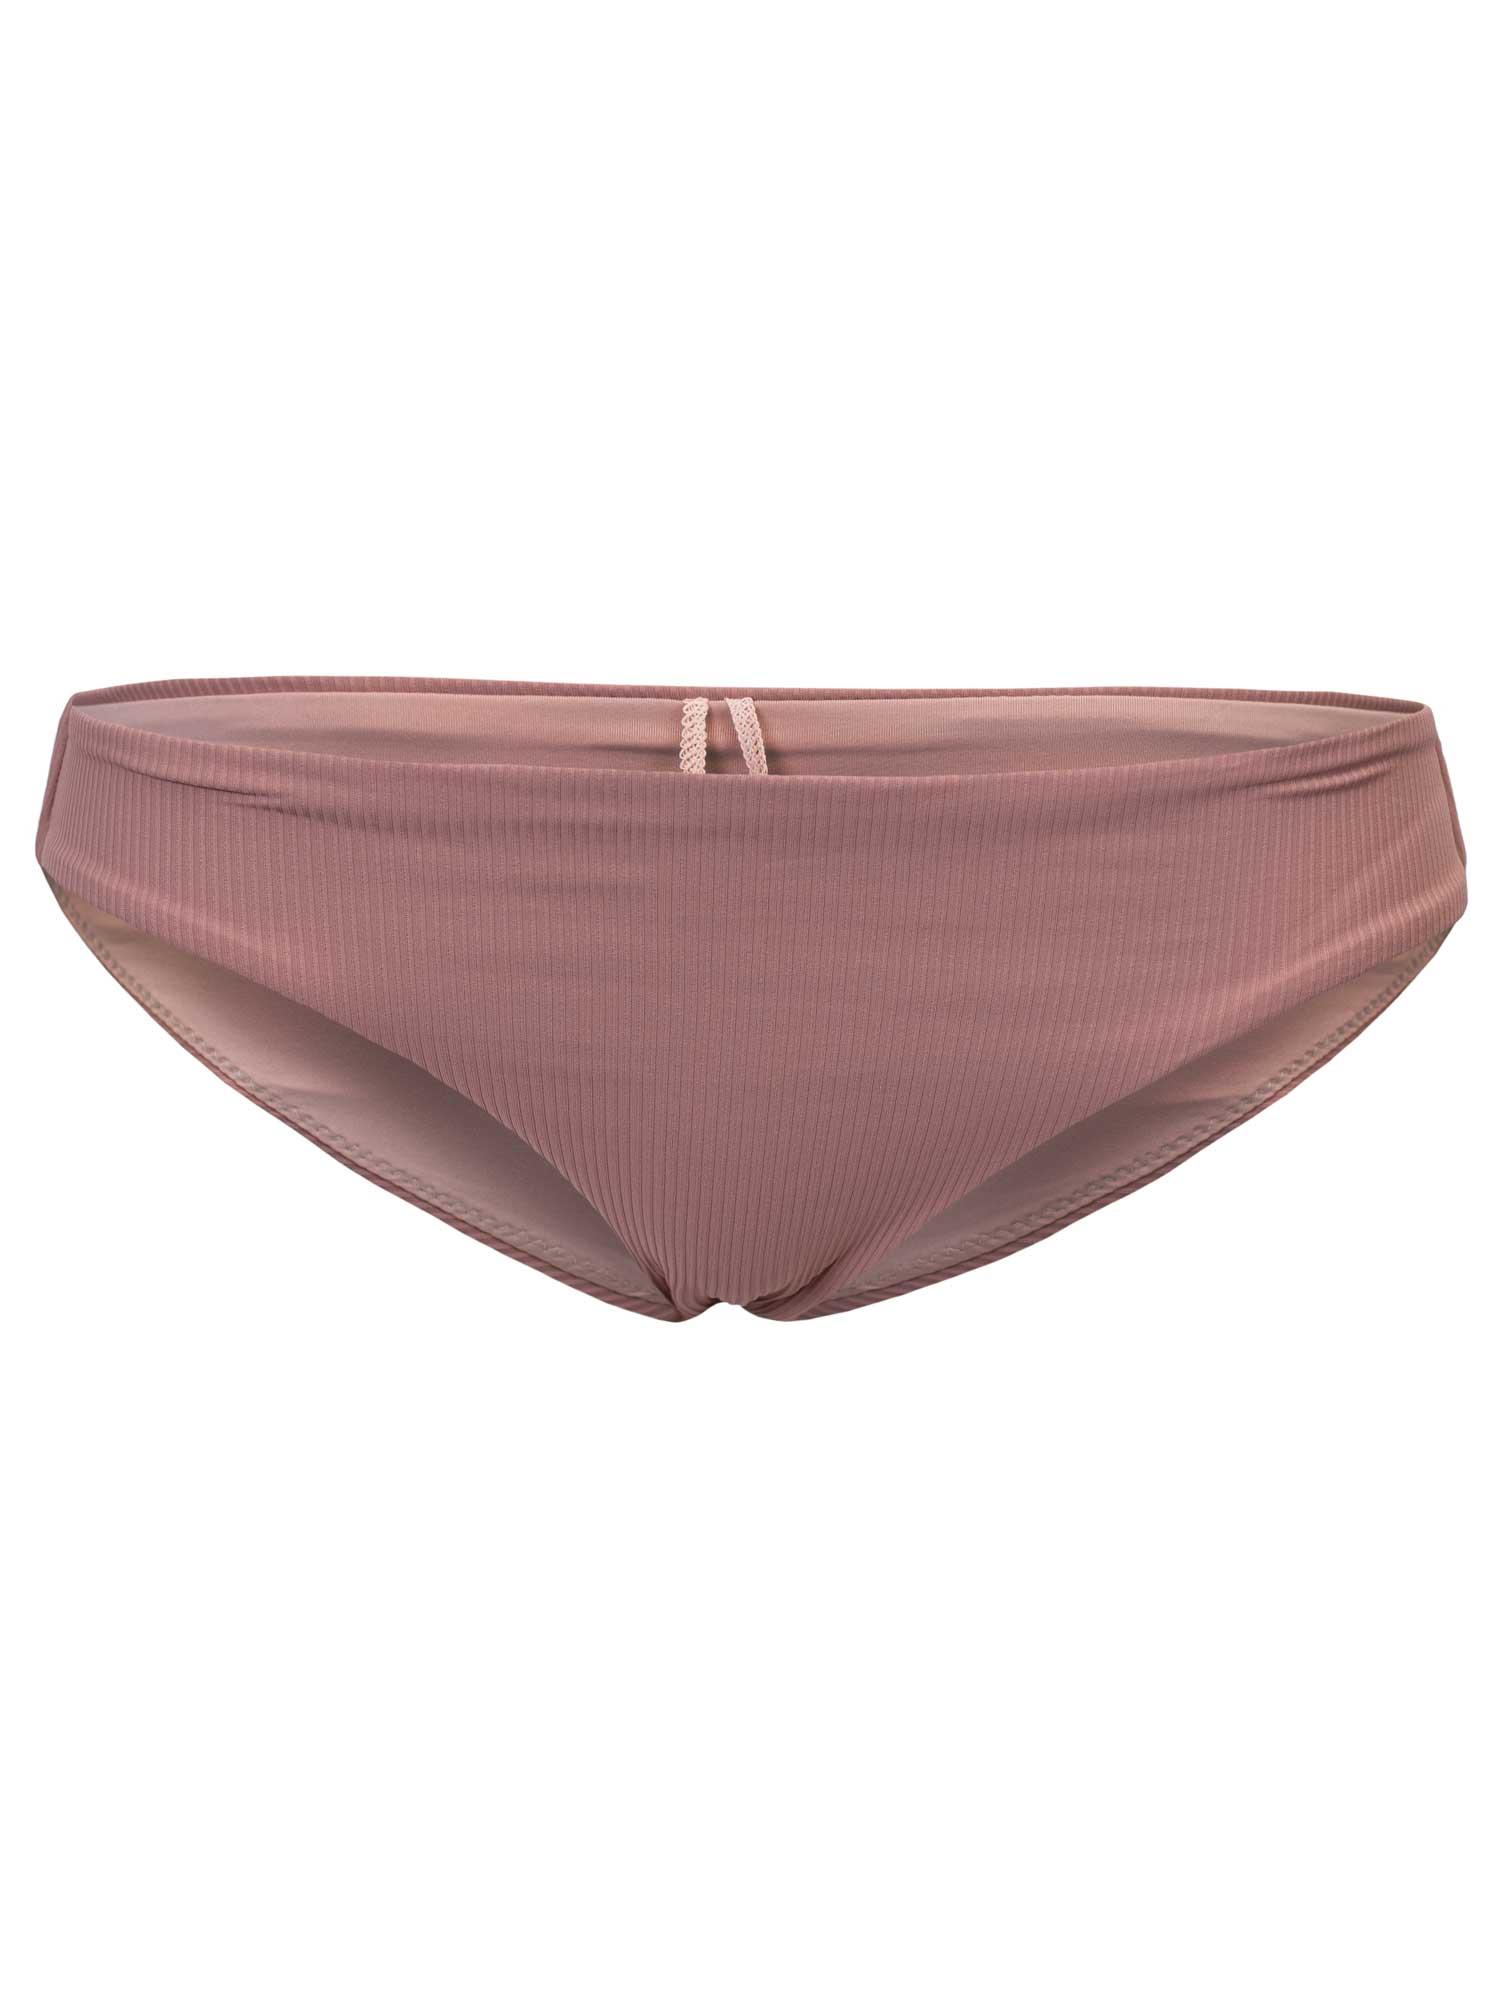 BRILLE Ženski donji deo kupaćeg kostima Bella Rib Swimsuit bottoms roze